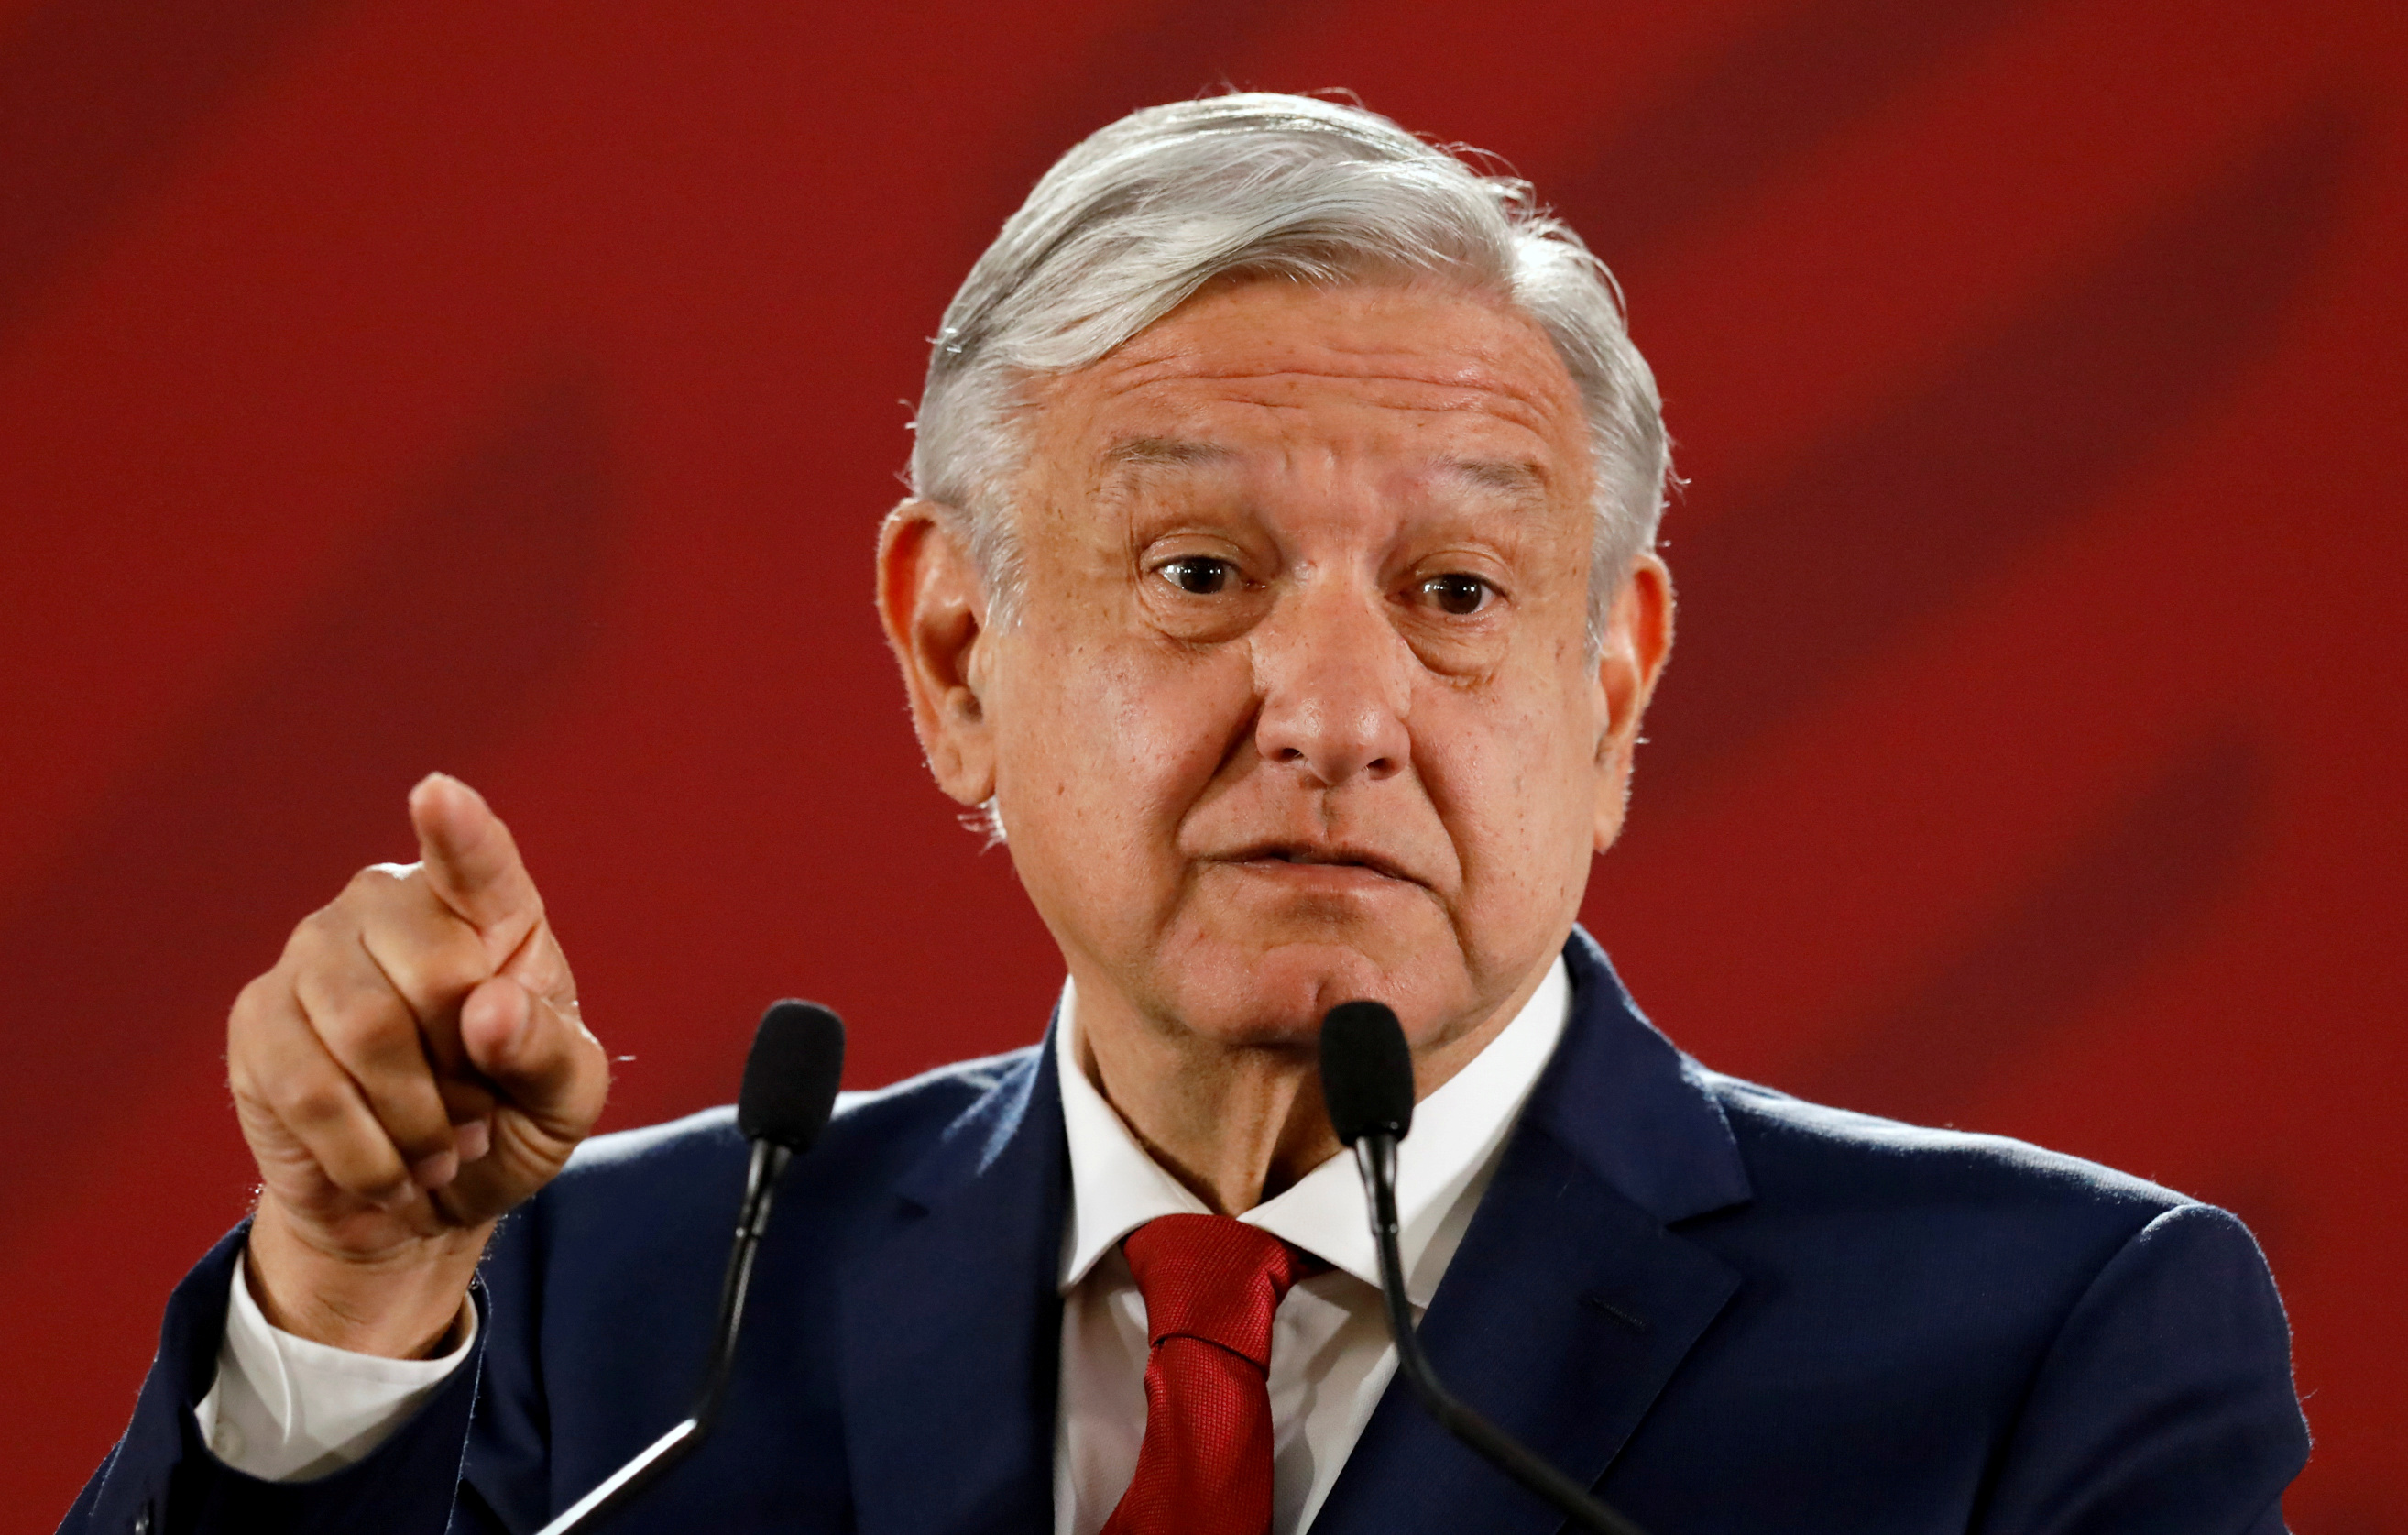 “No dejen de salir”, el mensaje de López Obrador que indignó a los mexicanos en plena pandemia (VIDEO)